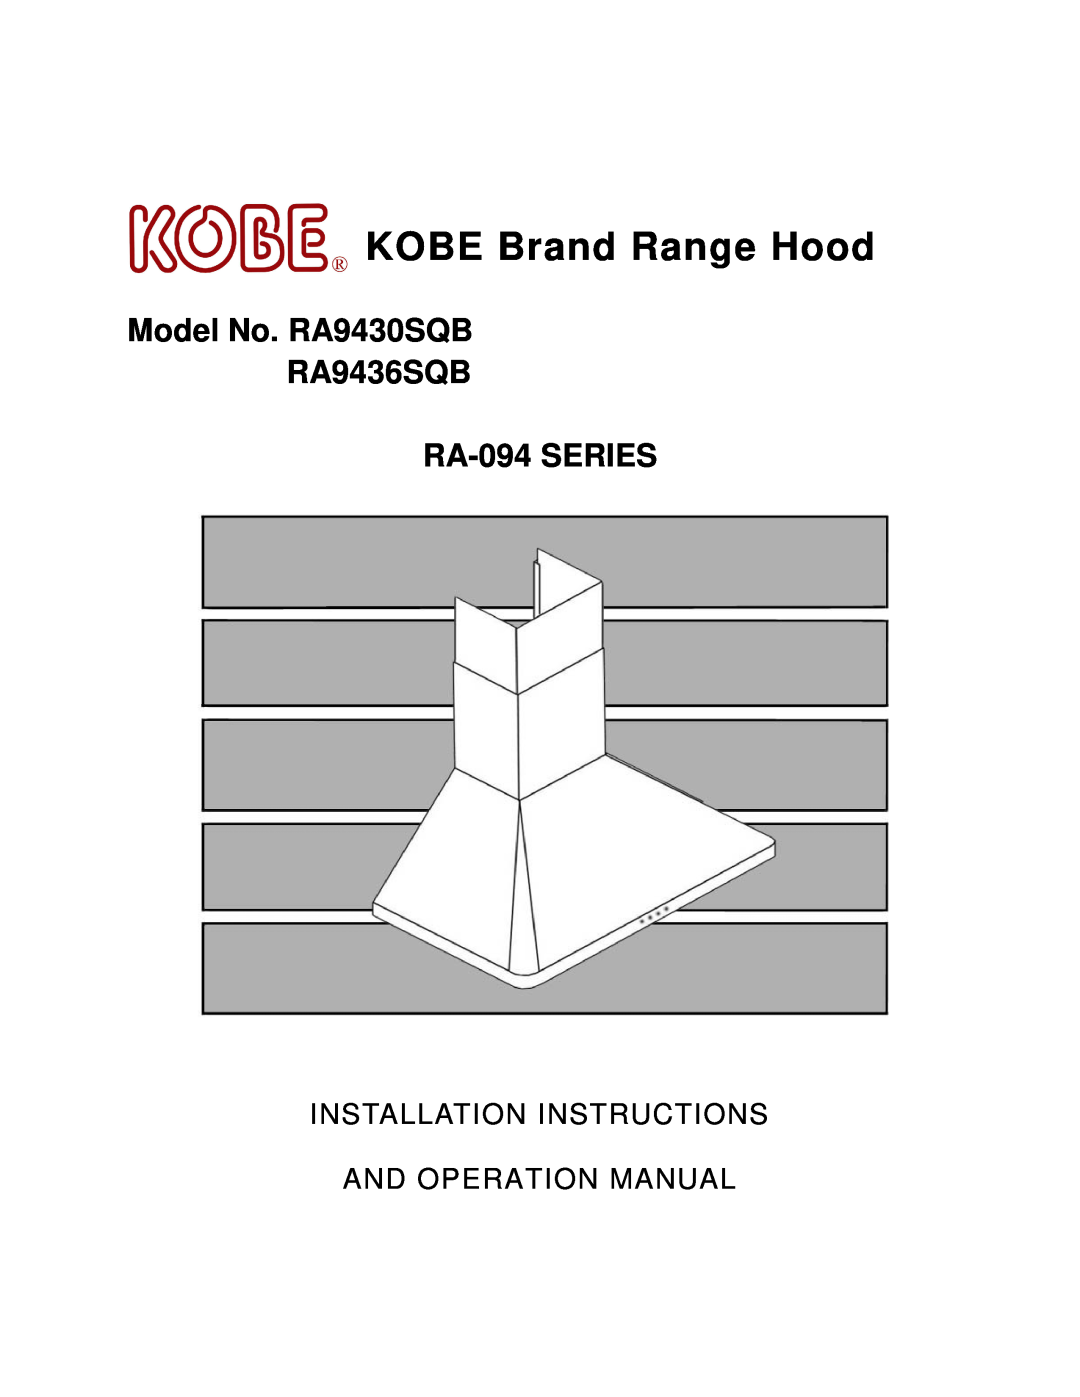 Kobe Range Hoods RA-094 SERIES installation instructions KOBE Brand Range Hood, Model No. RA9430SQB RA9436SQB 